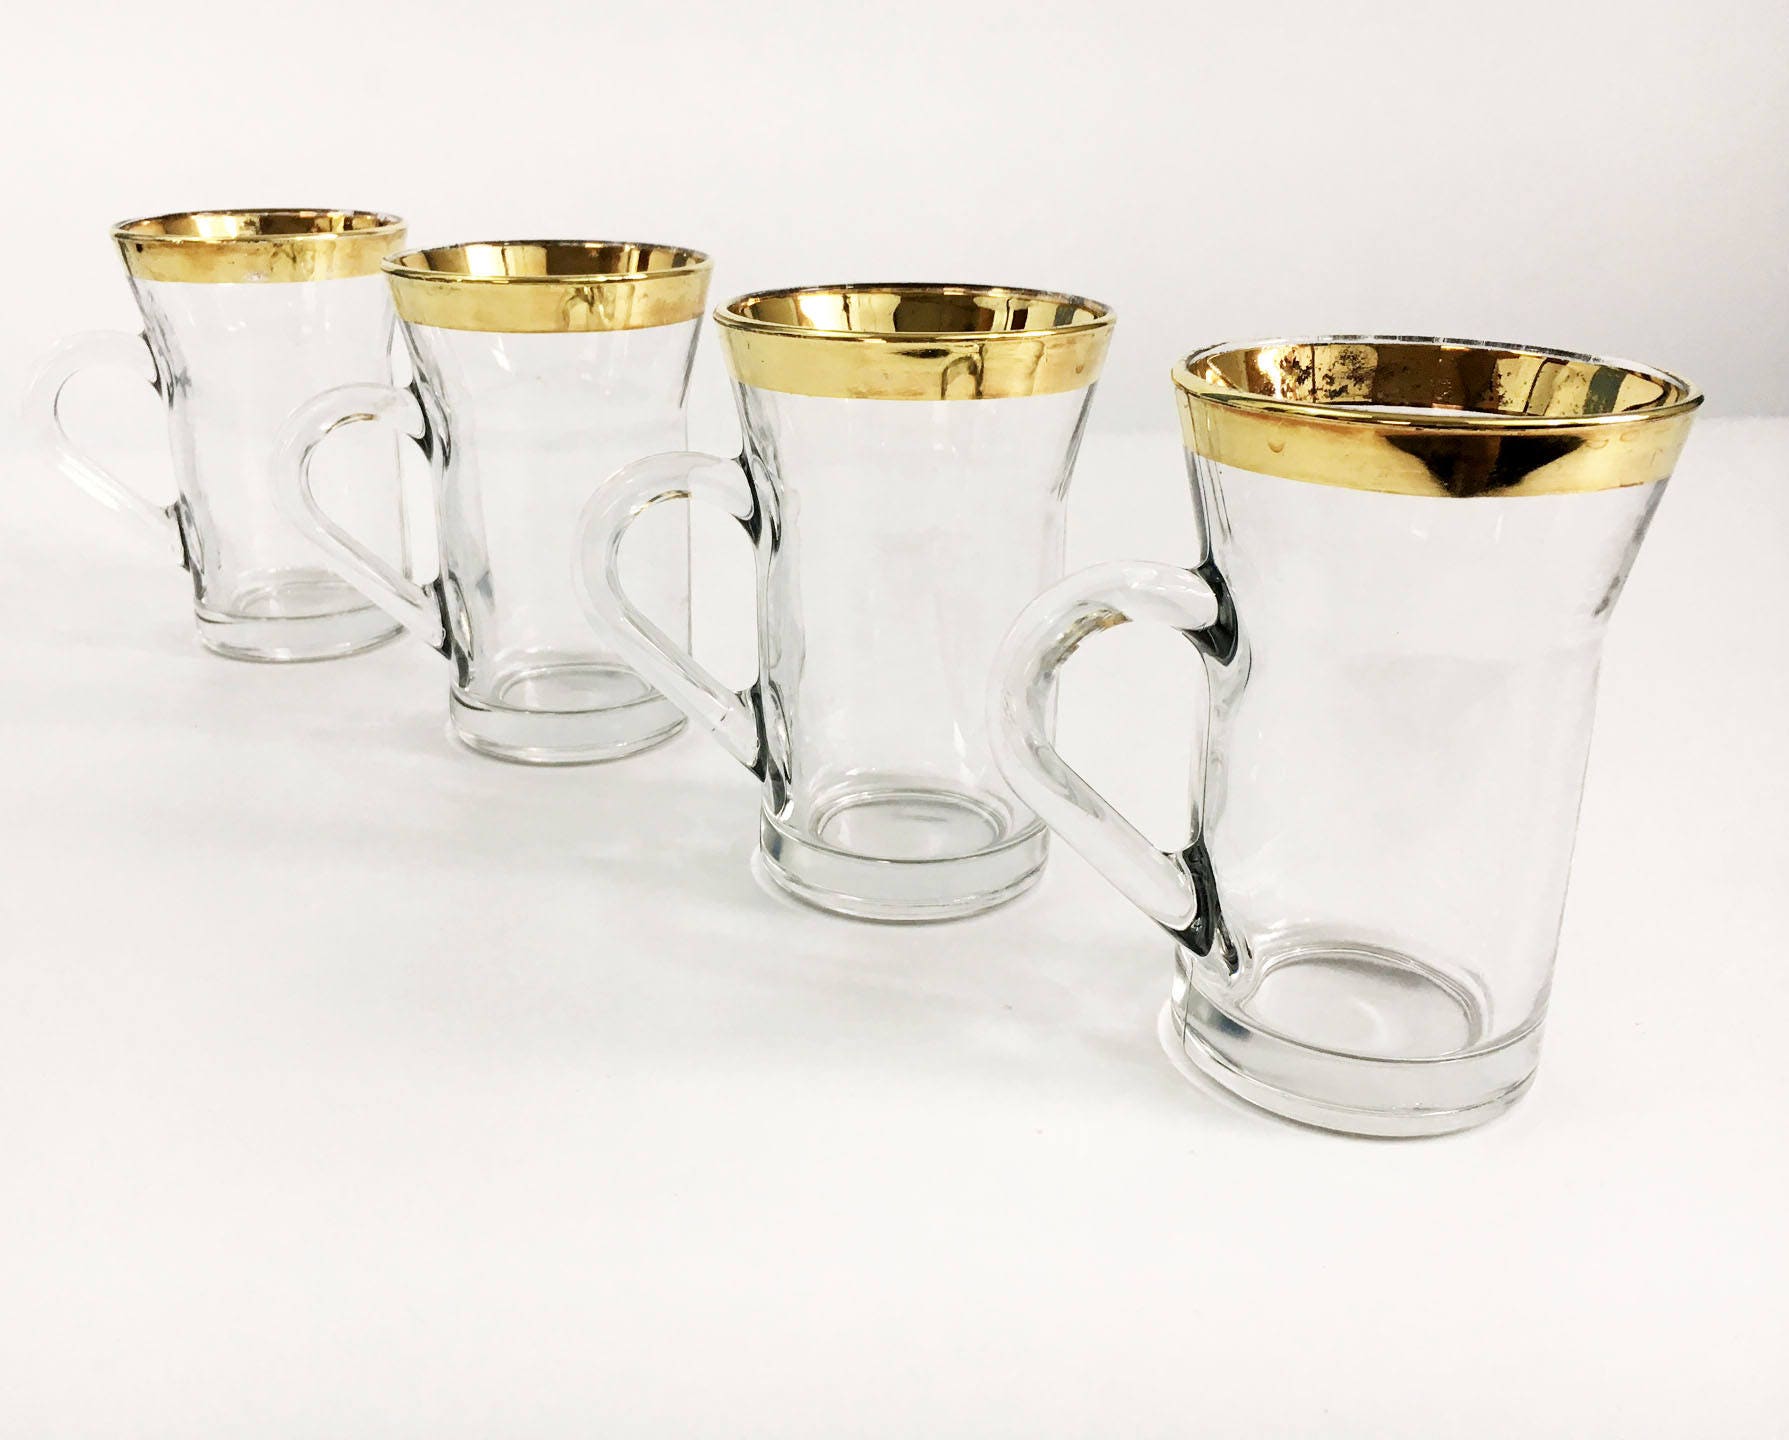 Buy Glass Tall Irish Coffee Mugs with Handle Set of 2 Large Cup